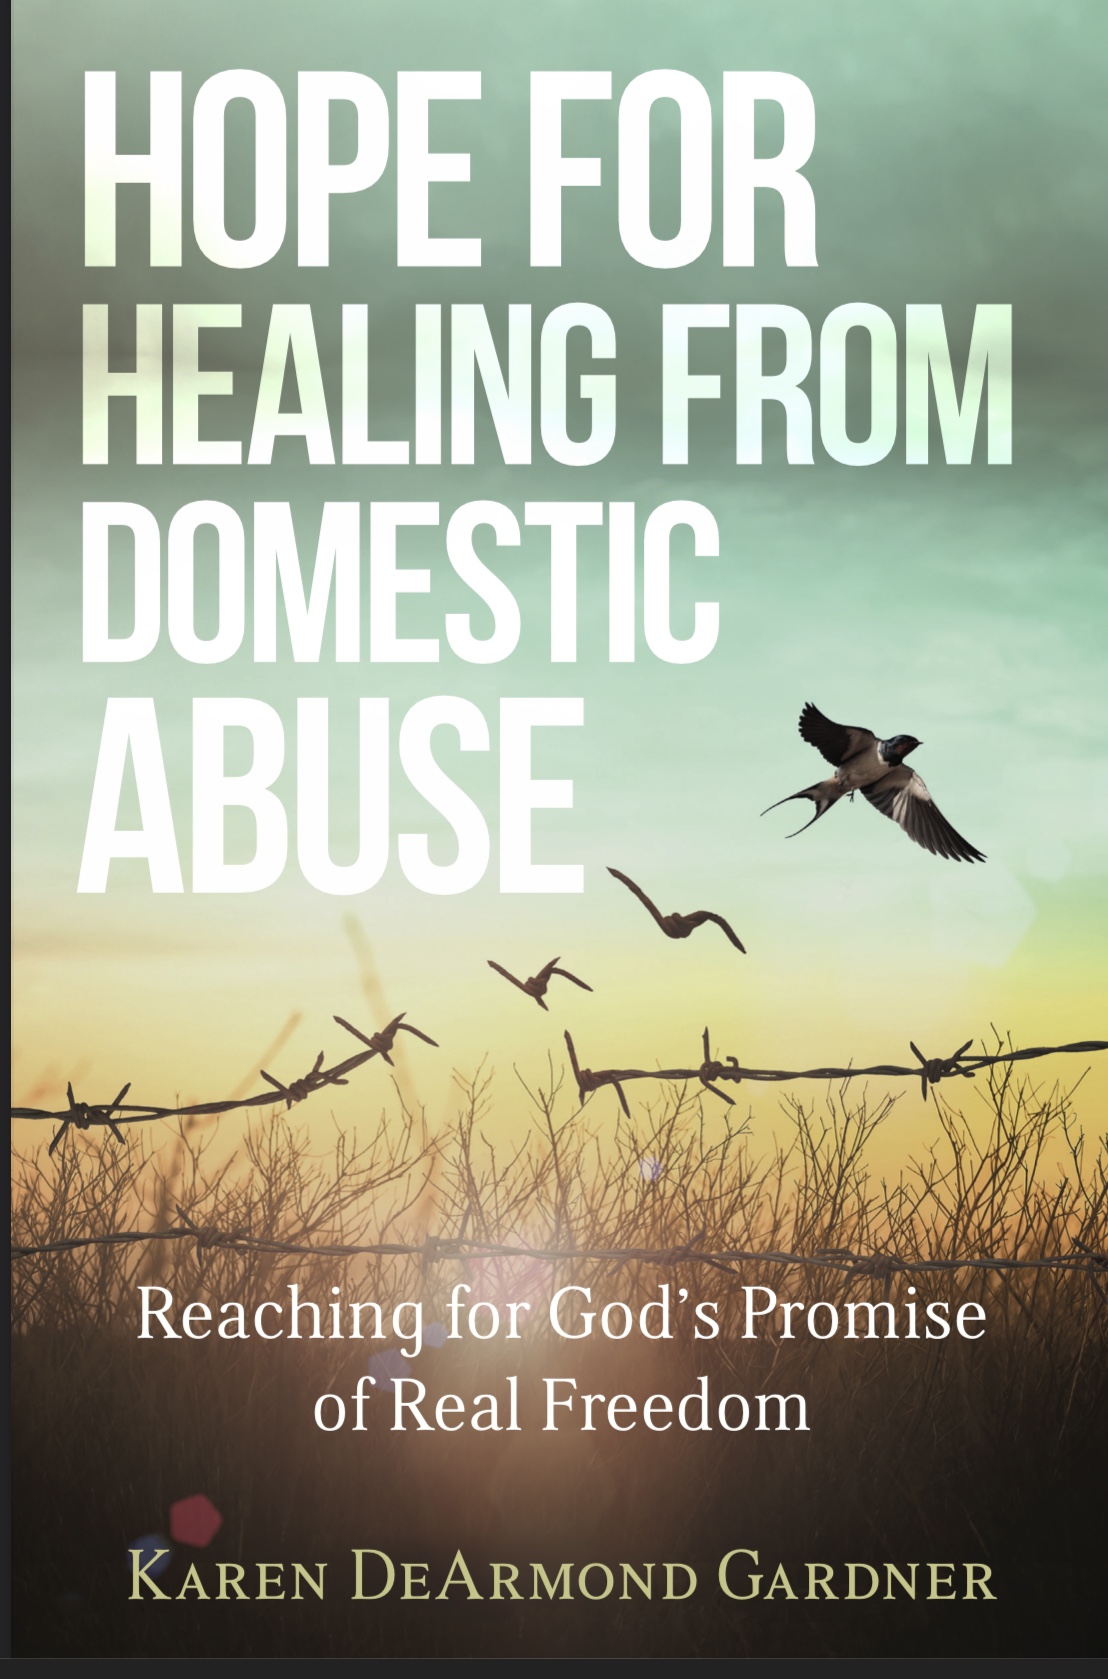 Book, abuse, healing